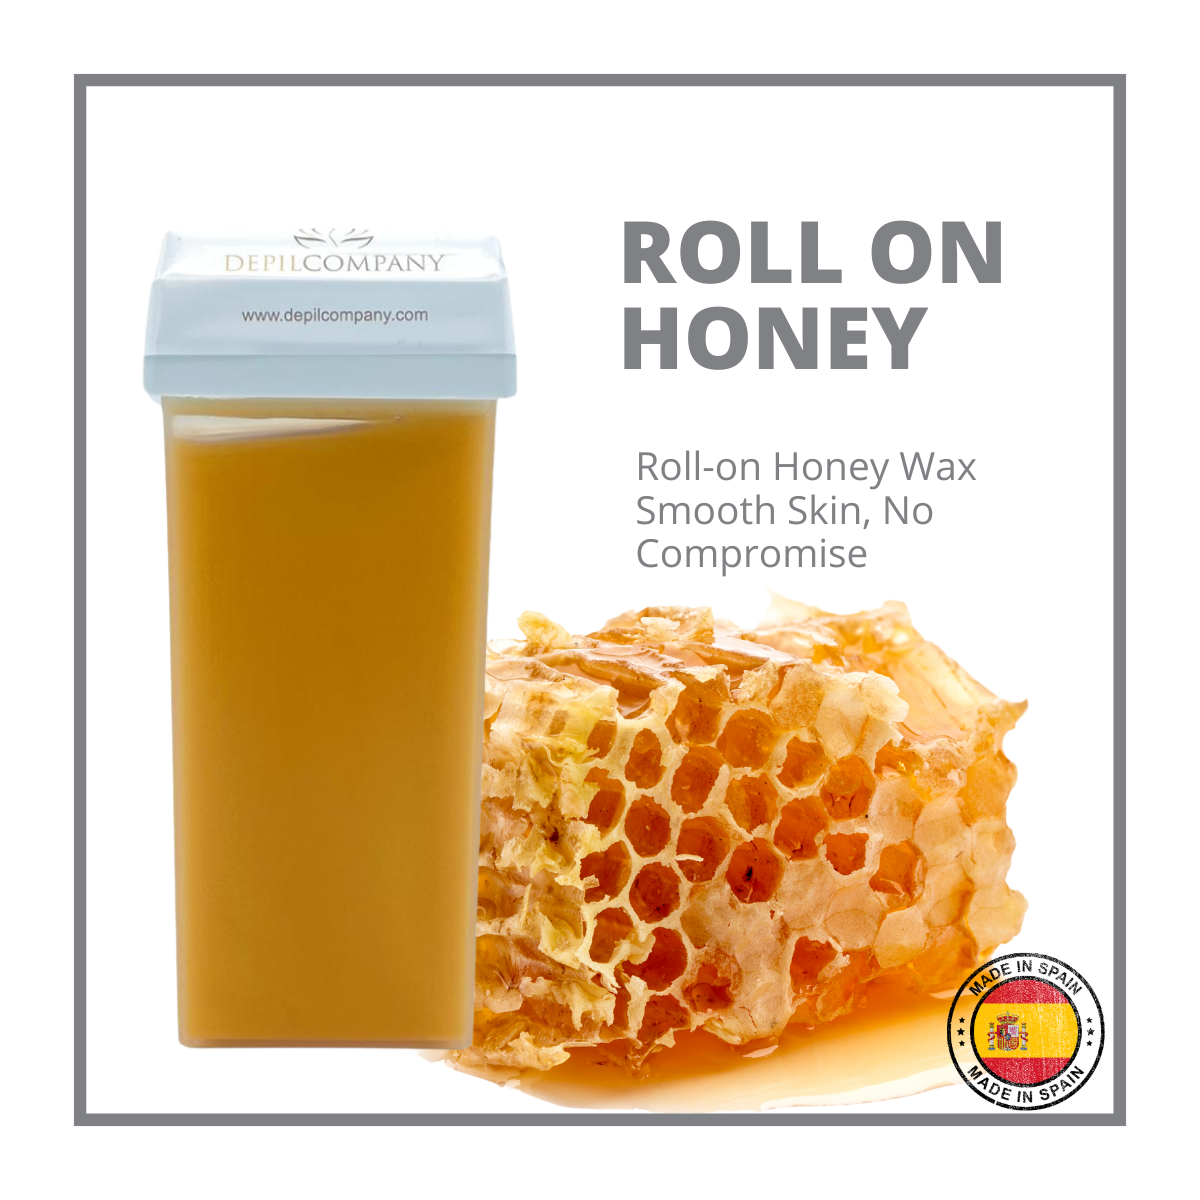 Depilcompany Roll-on Honey 96 Units